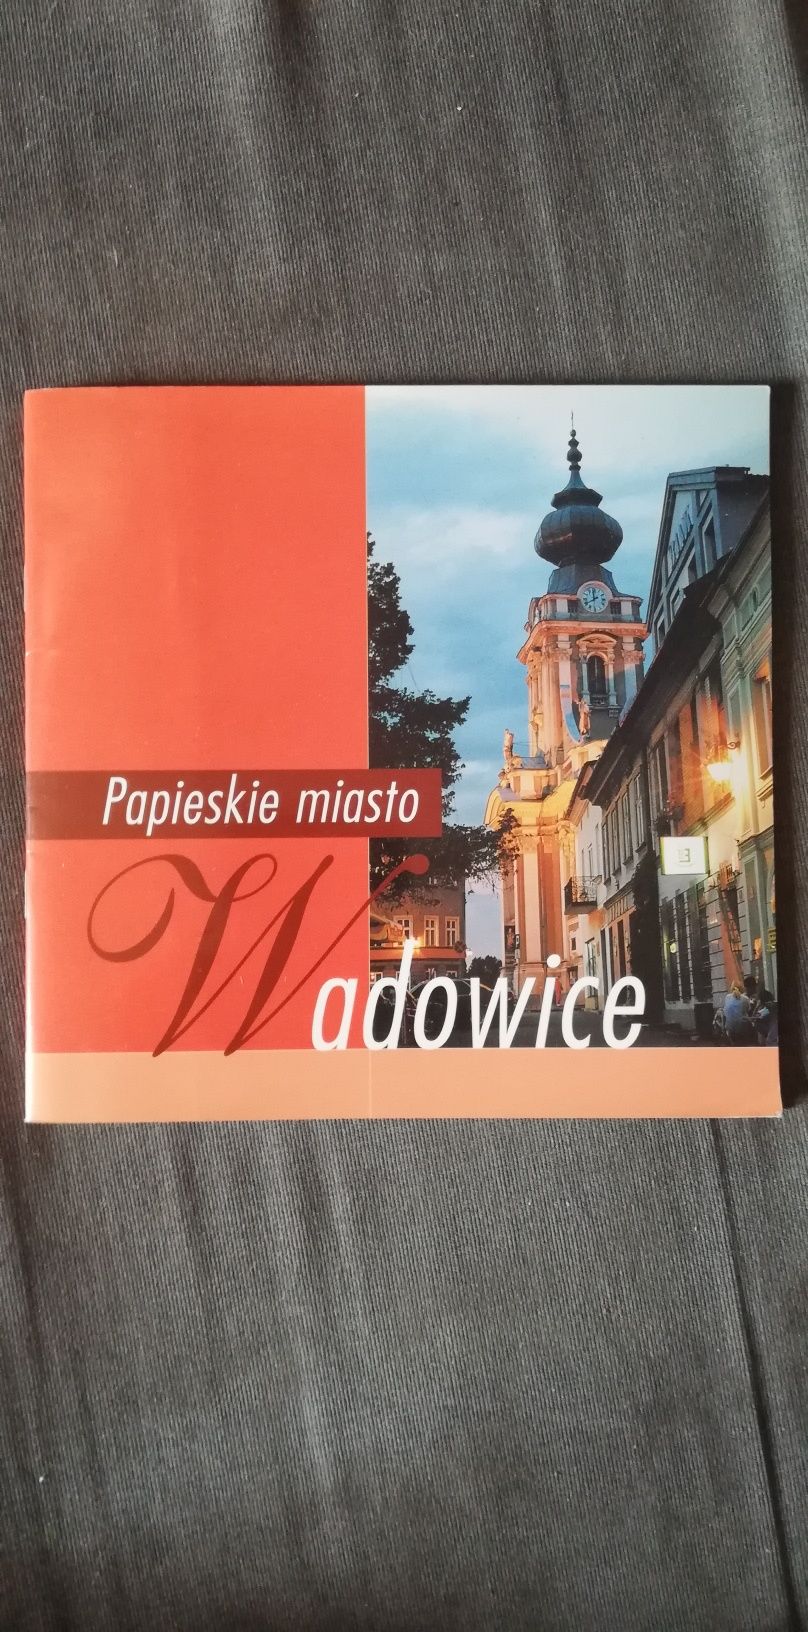 Papieskie miasto Wadowice